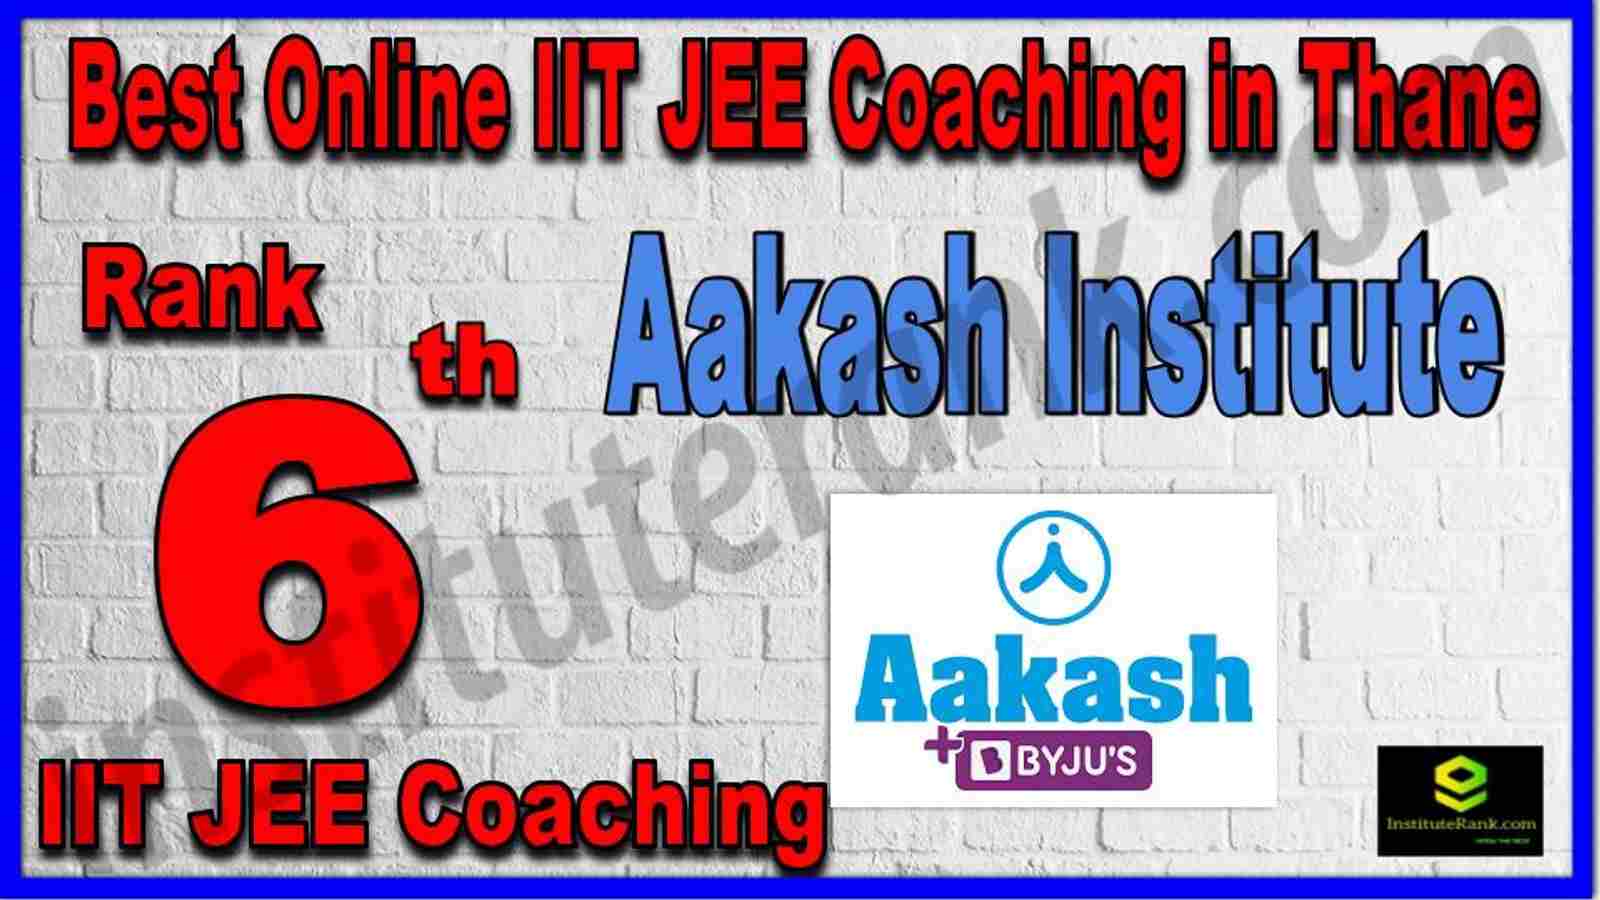 Rank 6th Best Online IIT JEE Coaching in Thane